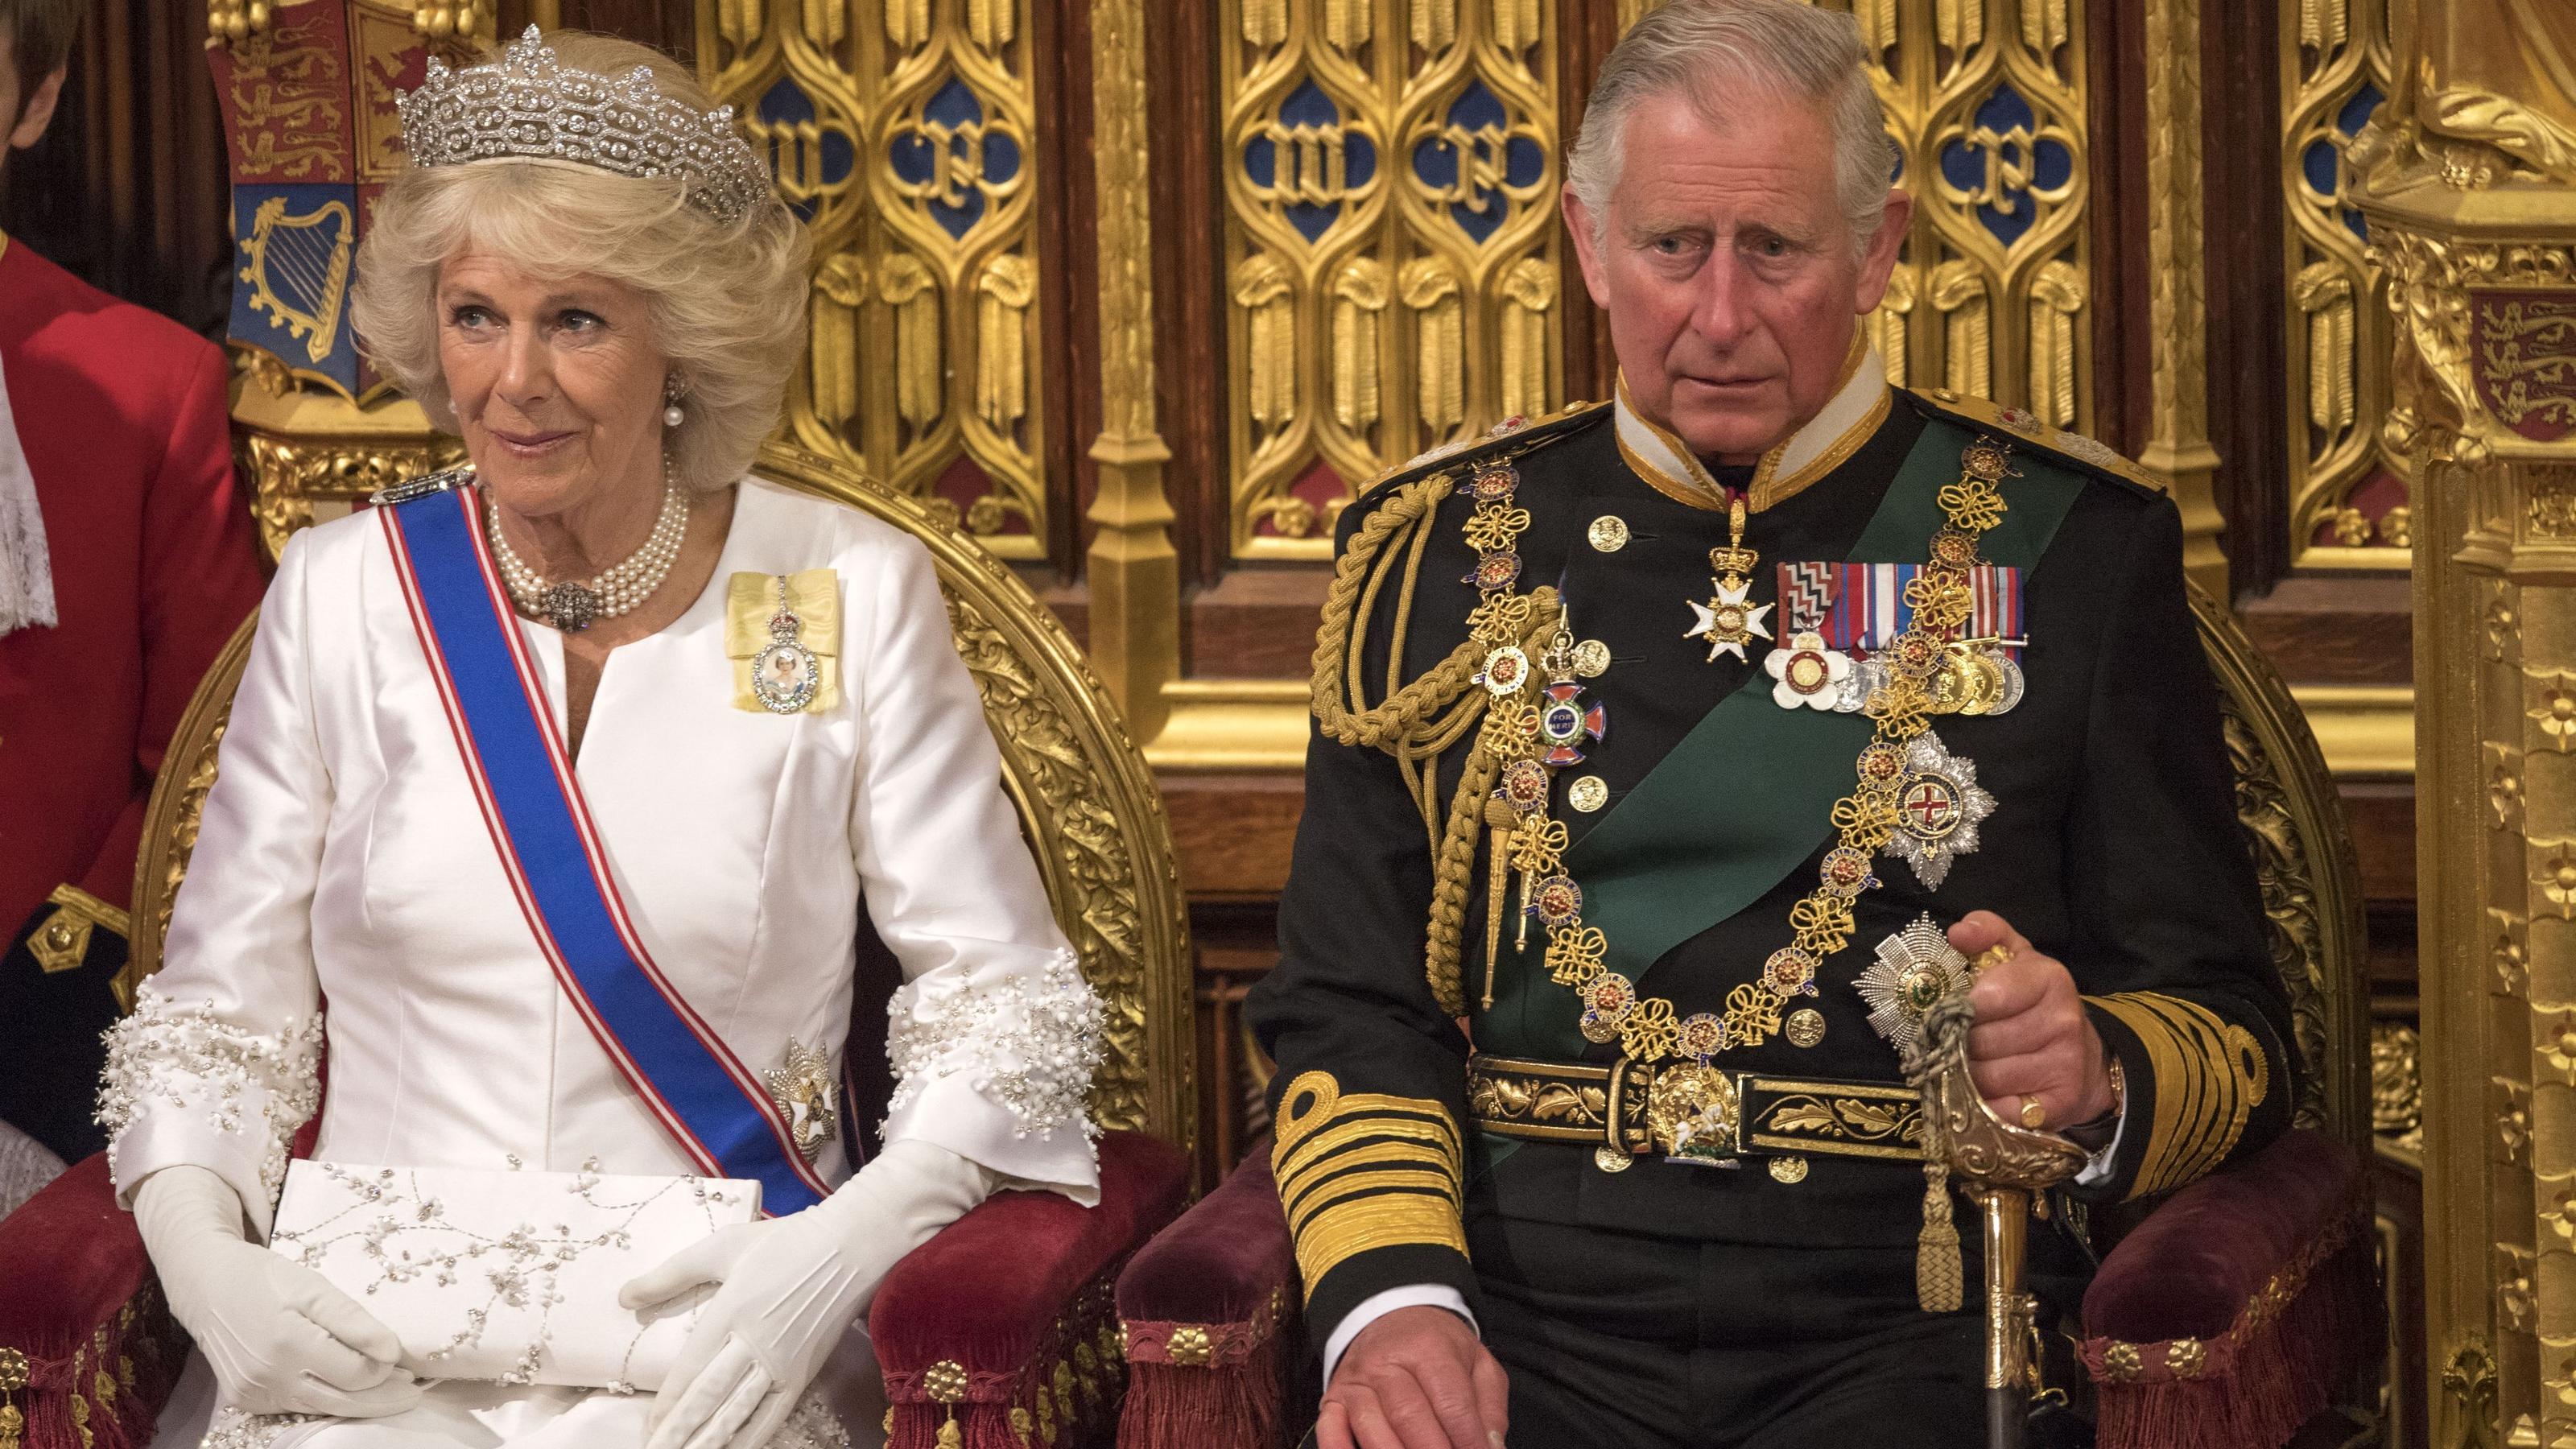 Staatseröffnung des Parlaments 2016. Camilla und Charles in royaler Montur bei der Staatseröffnung des Parlaments im House of Lords im Palace of Westminster in London.